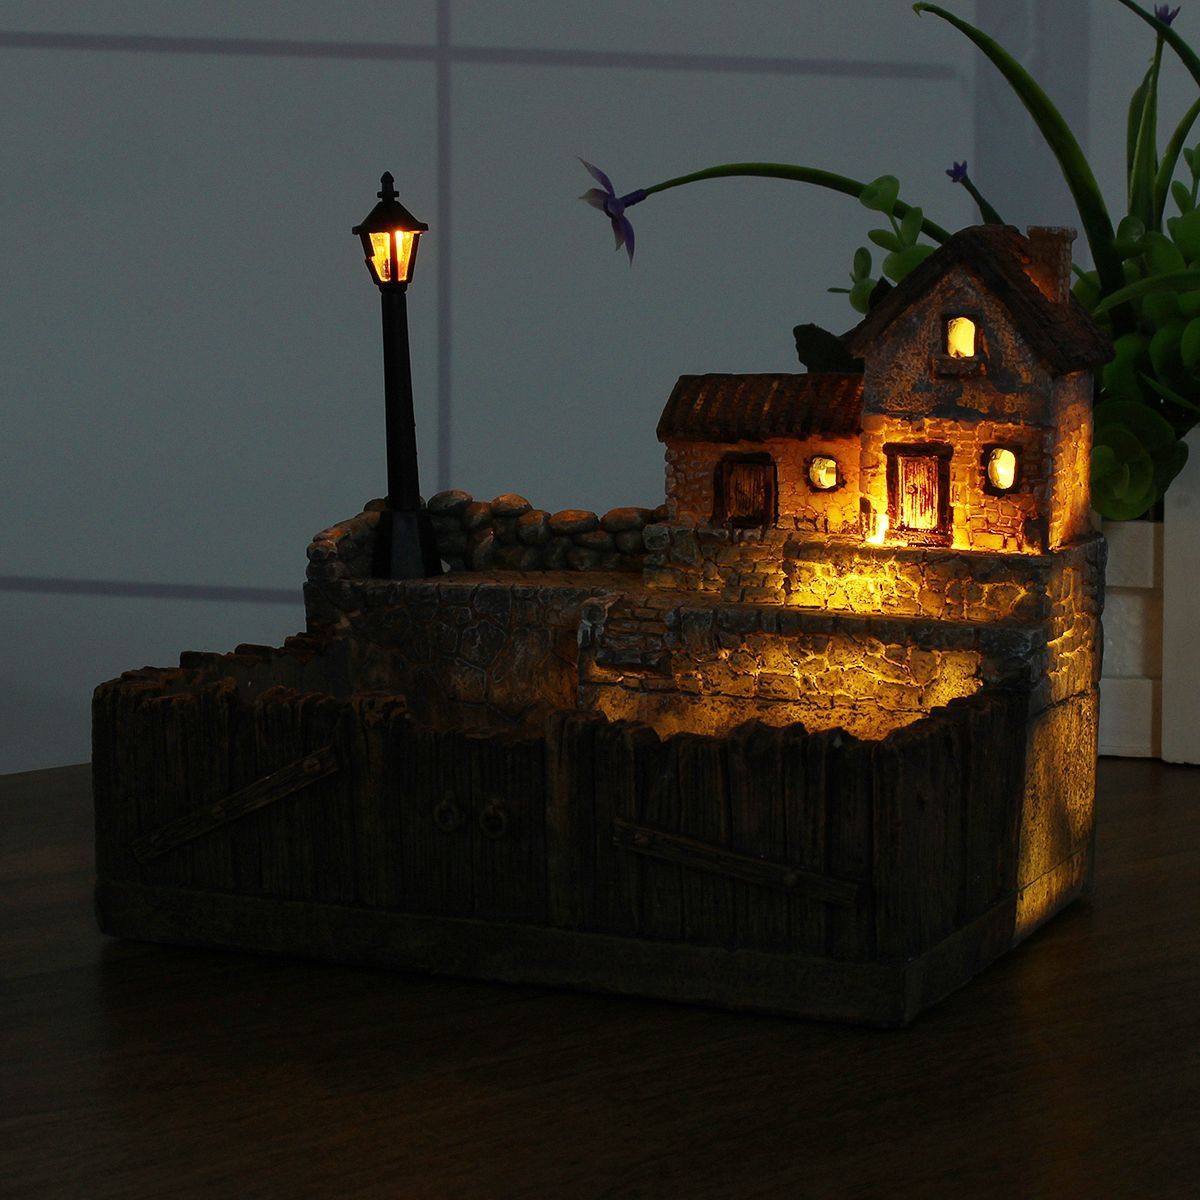 Lighting-Tuscanys-Cabin-Flower-Pot-Craft-Ornaments-Magic-Lantern-House-Planter-Bonsai-1473935